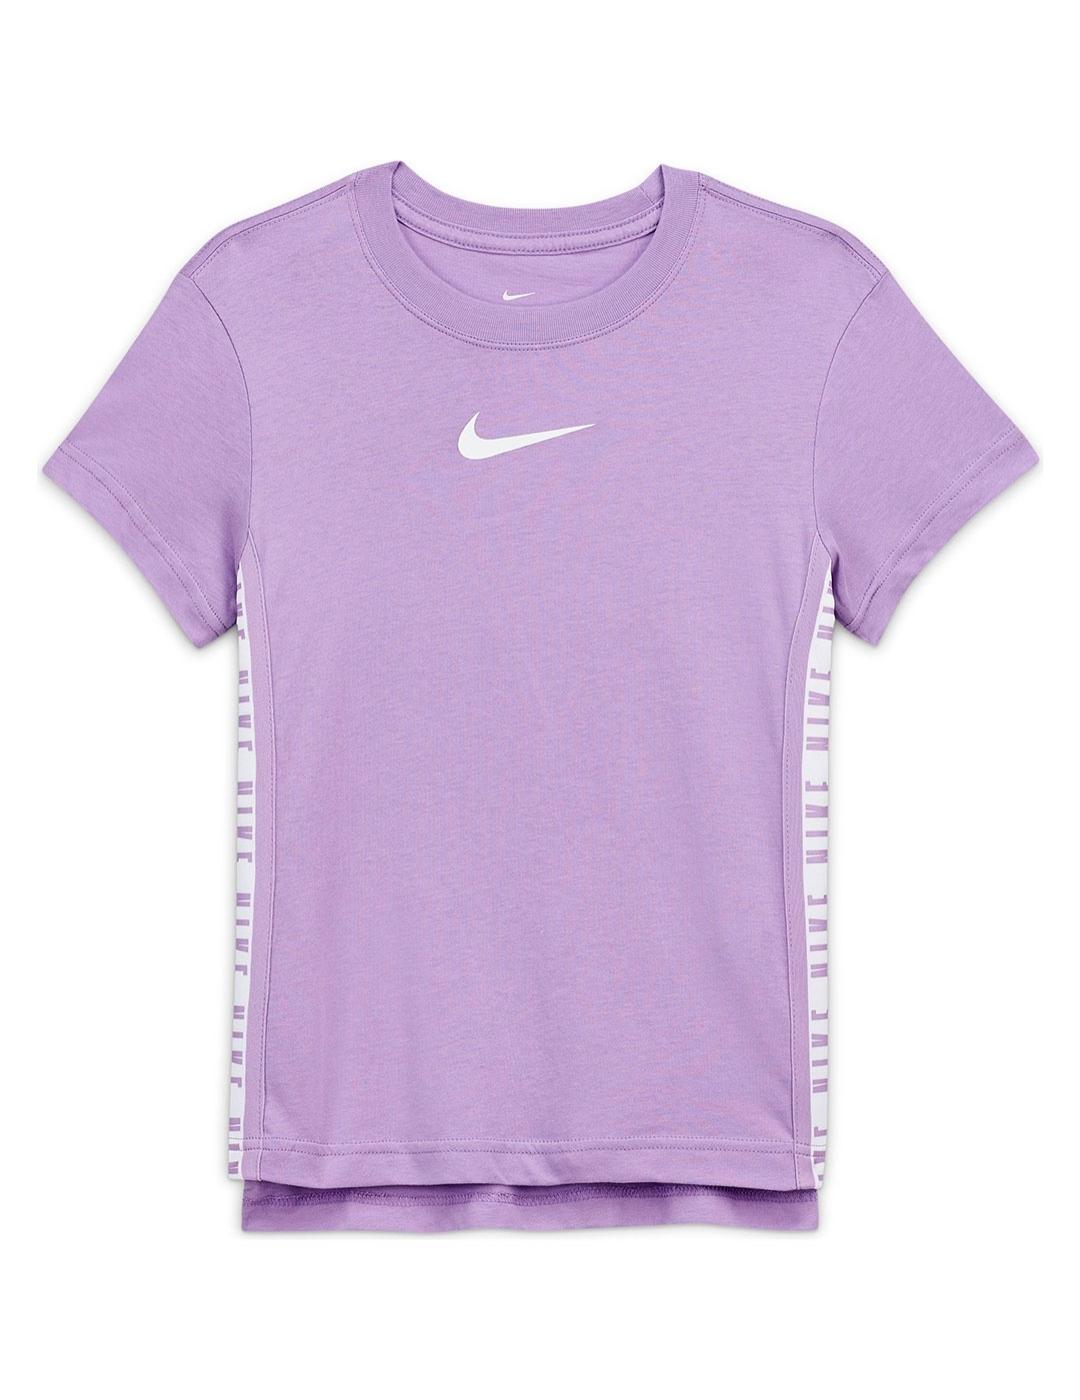 Camiseta Niña Nike Taping Morada